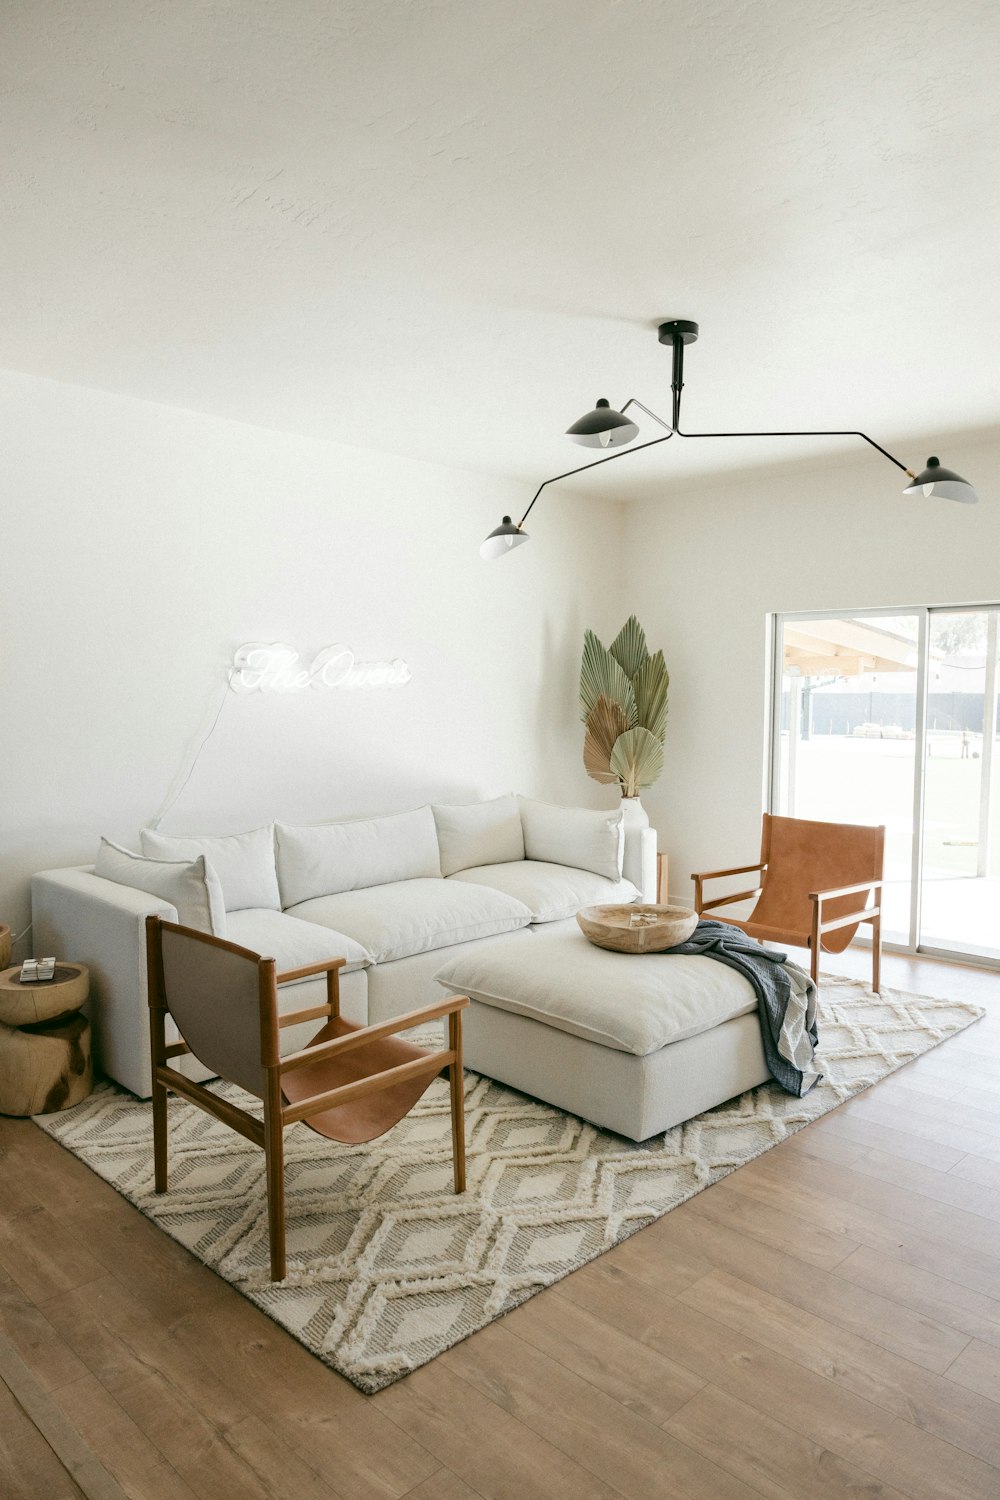 Minimalist Living Room Pictures | Download Free Images On Unsplash